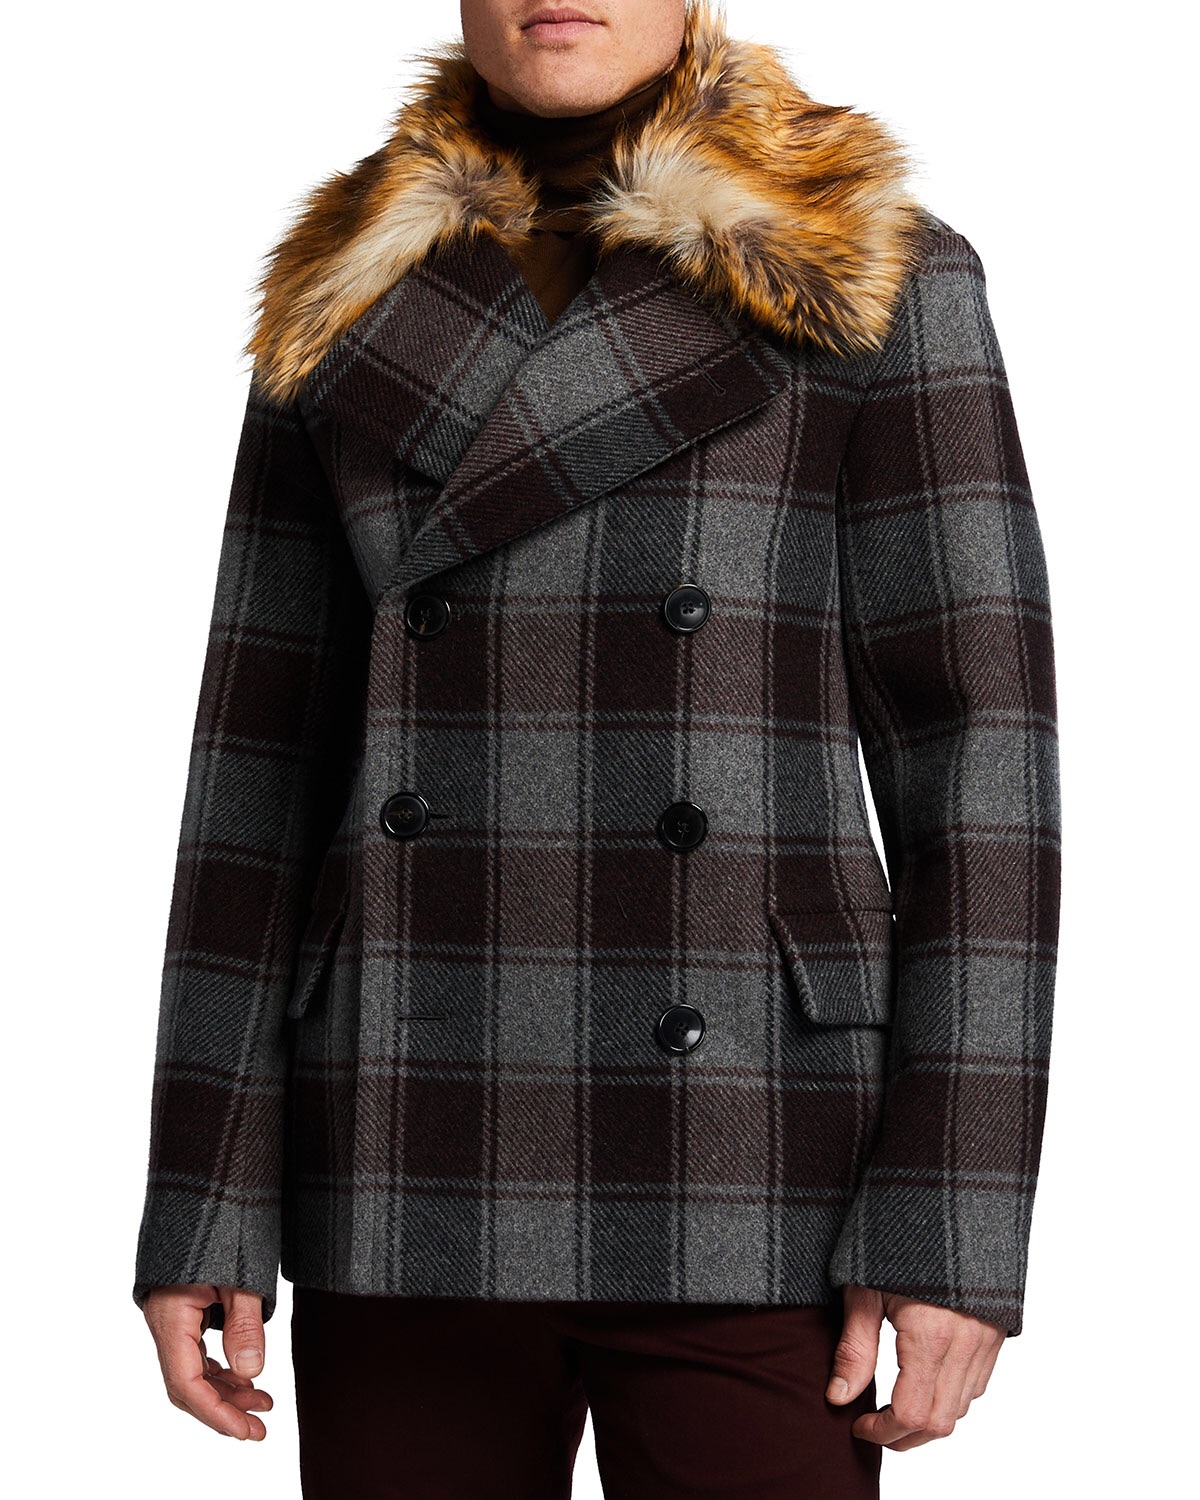 Dries Van Noten Men's Roddy Plaid Peacoat w/ Faux Fur Collar | Neiman Marcus
外套